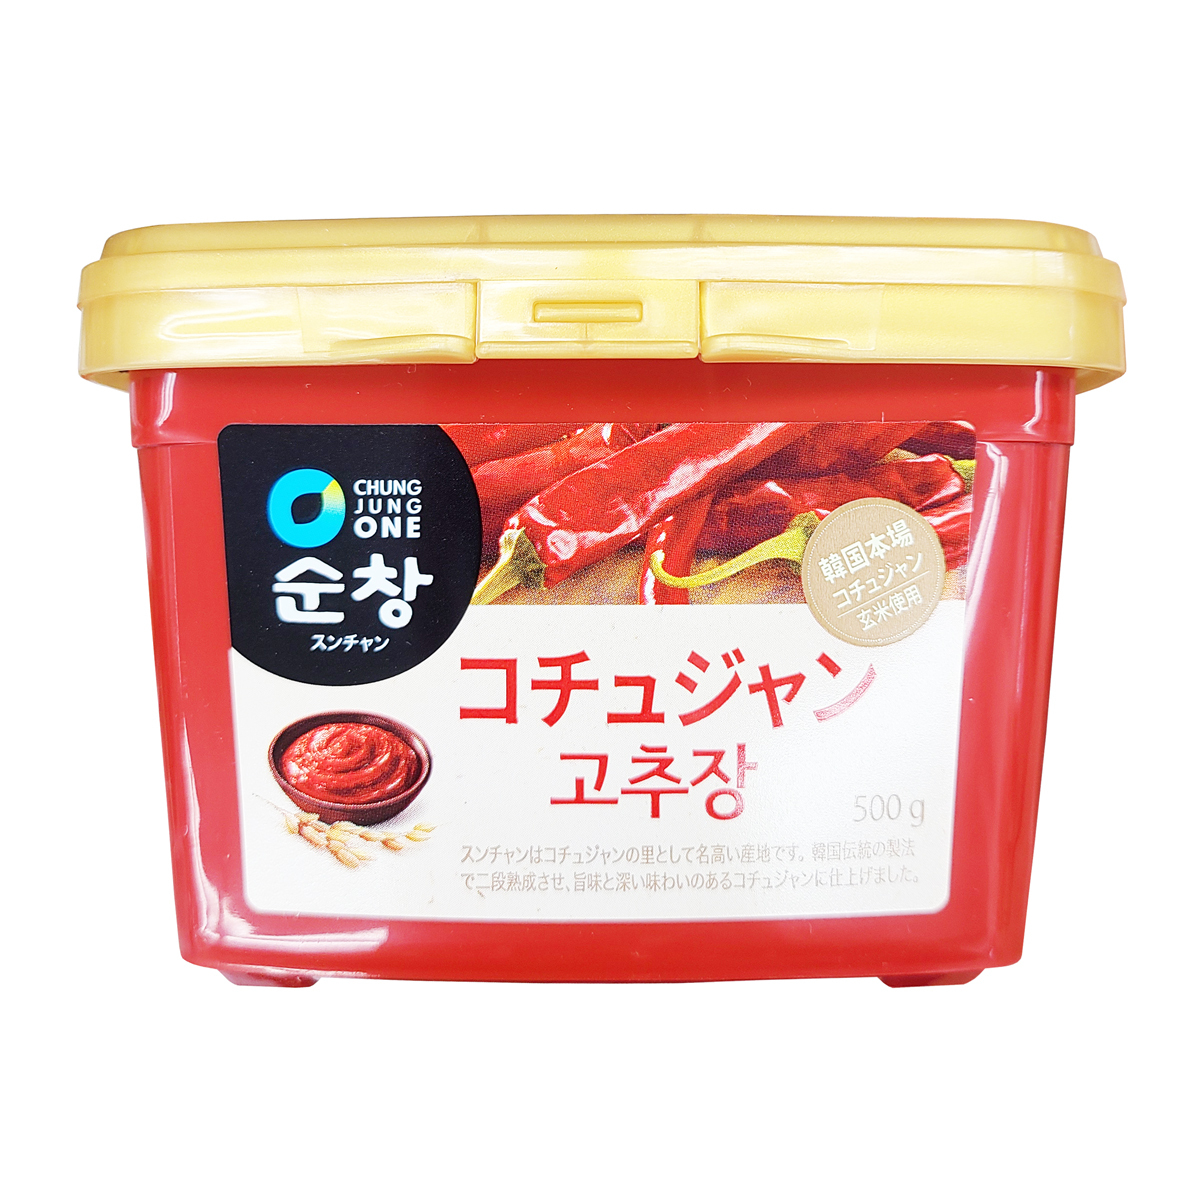 sn tea n brown rice gochujang 500g / Korea seasoning Korea food 